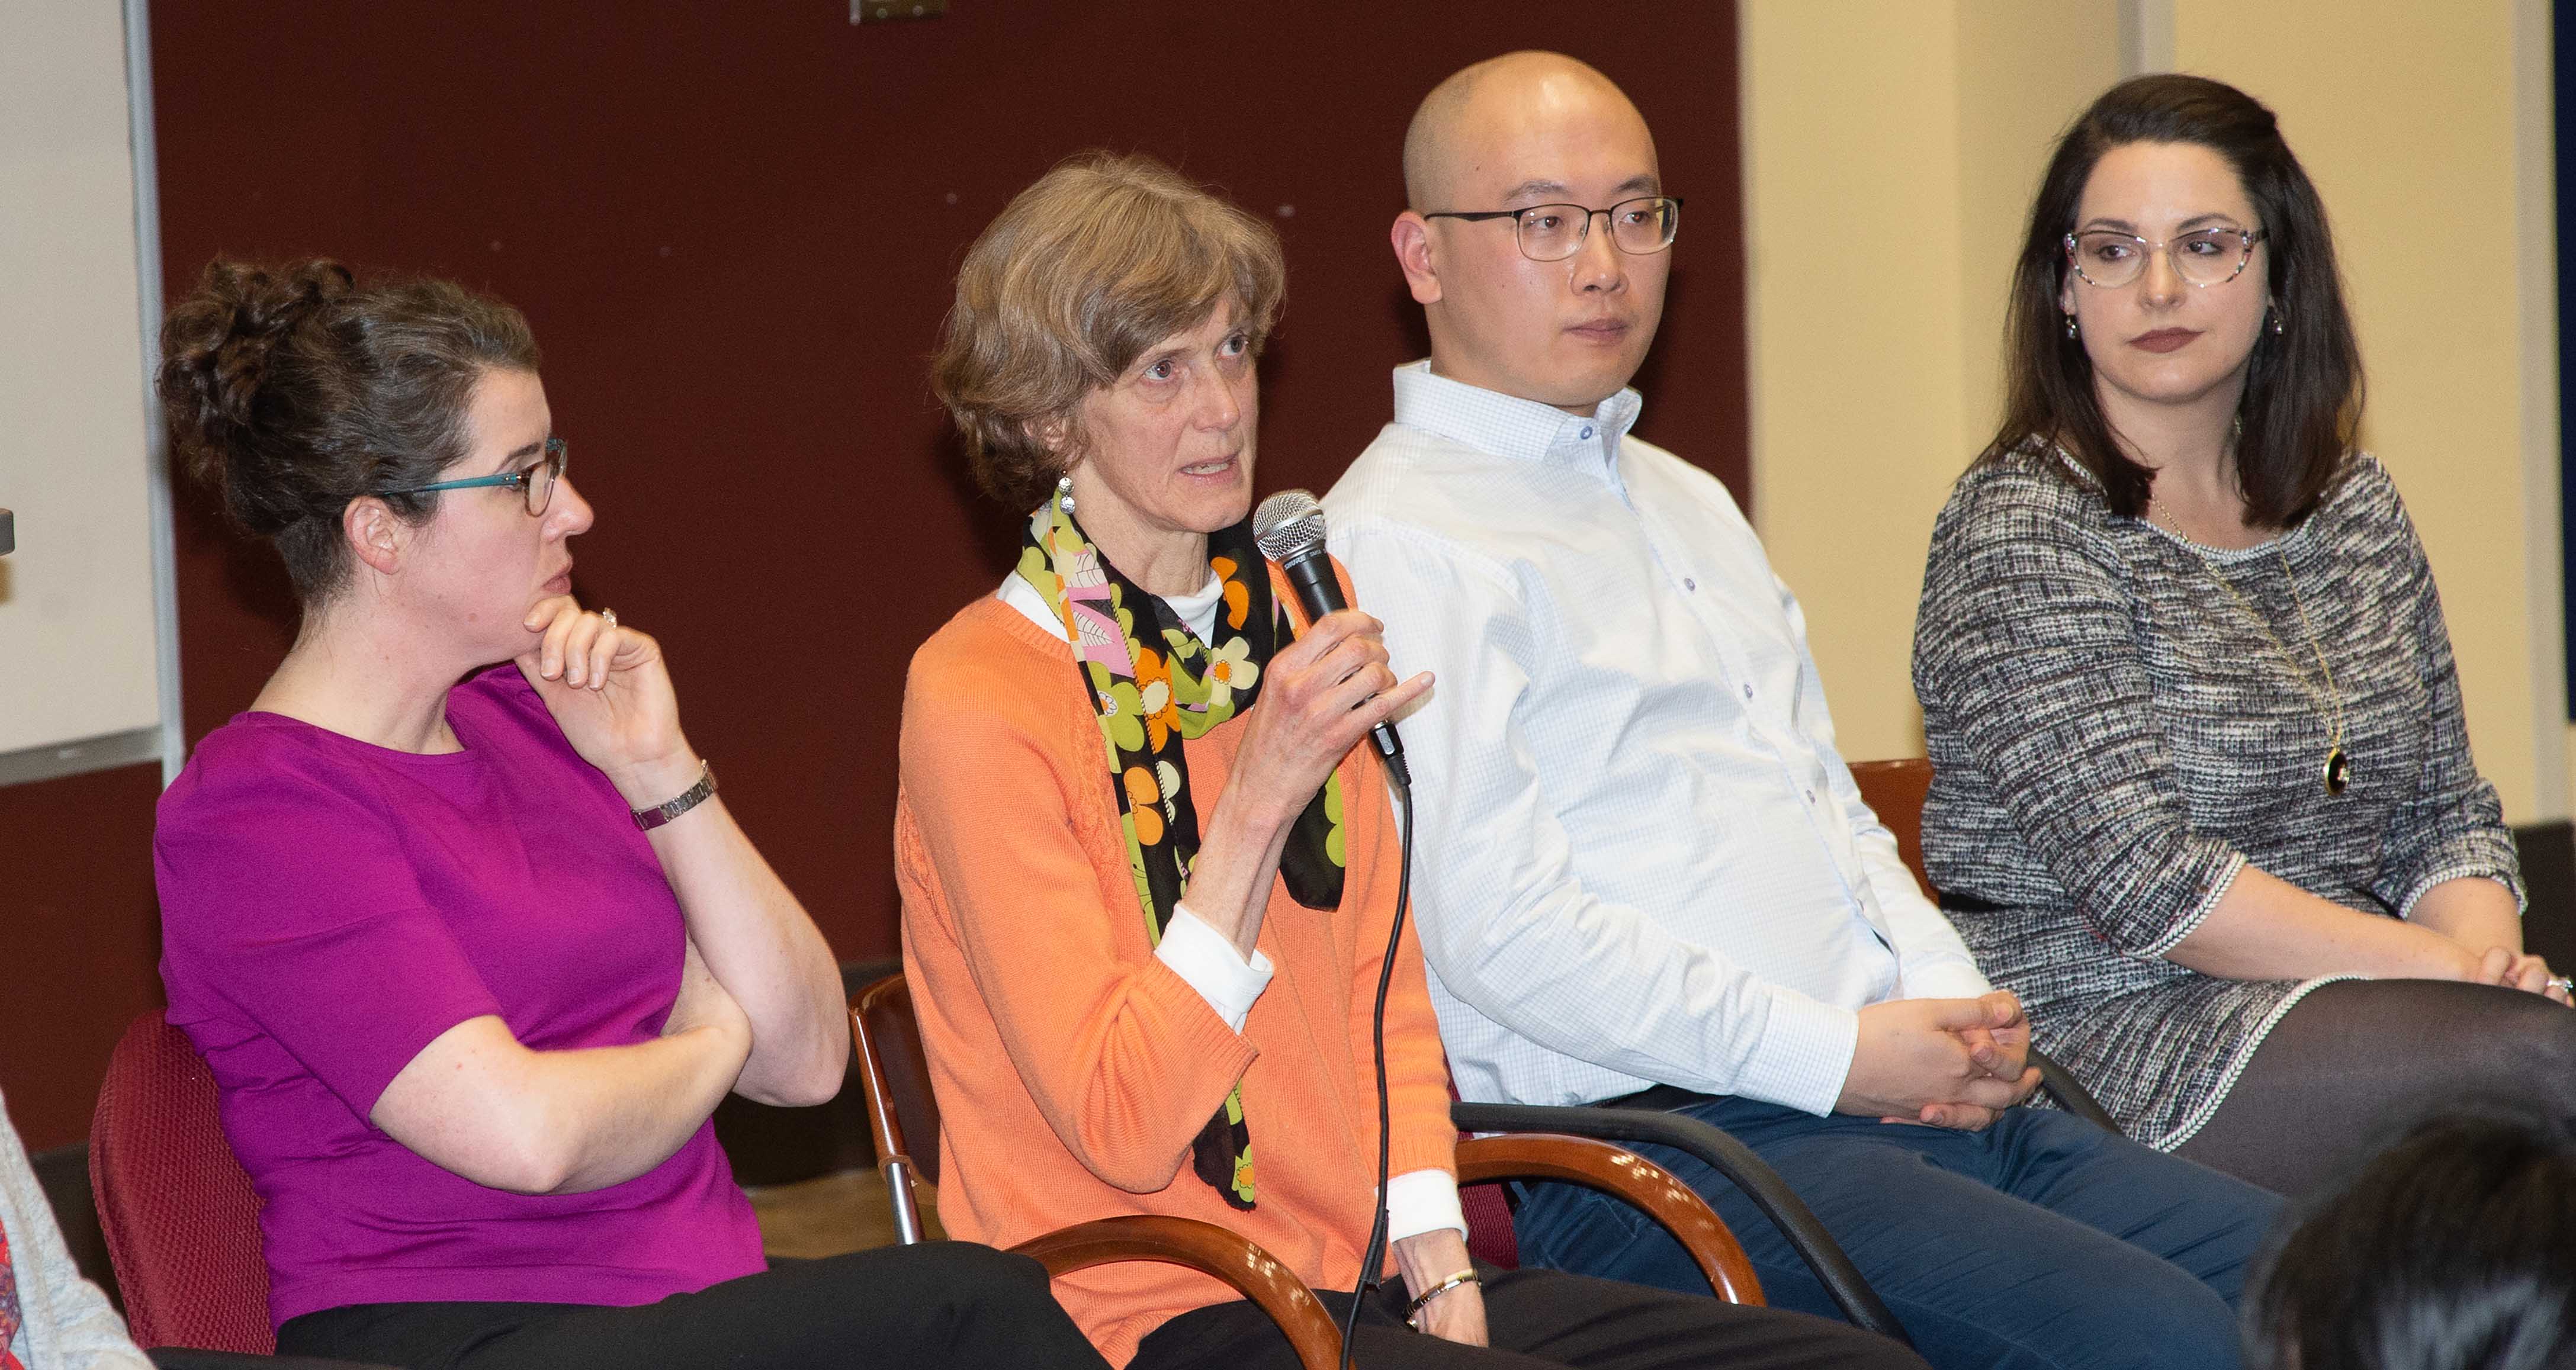 Panelists at coronavirus teach-in event